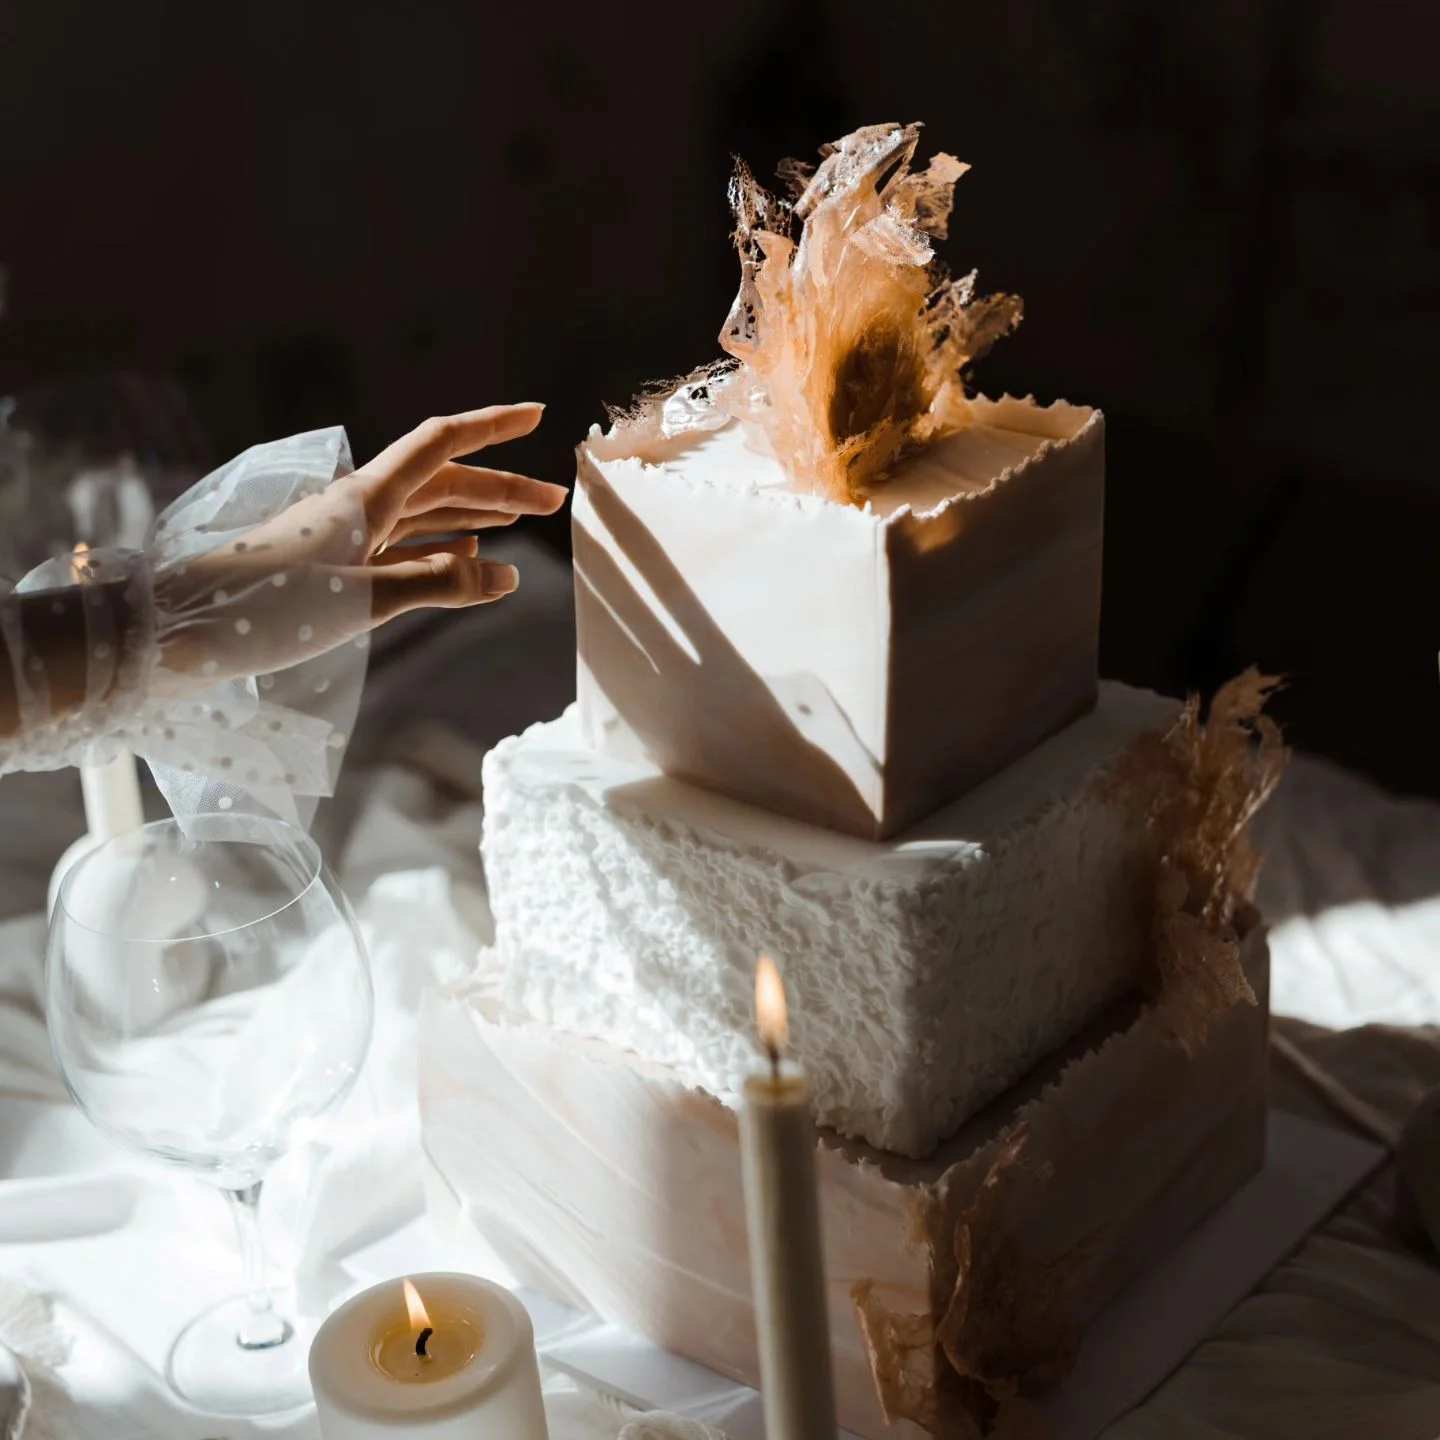 Scenic Rim Wedding Cakes